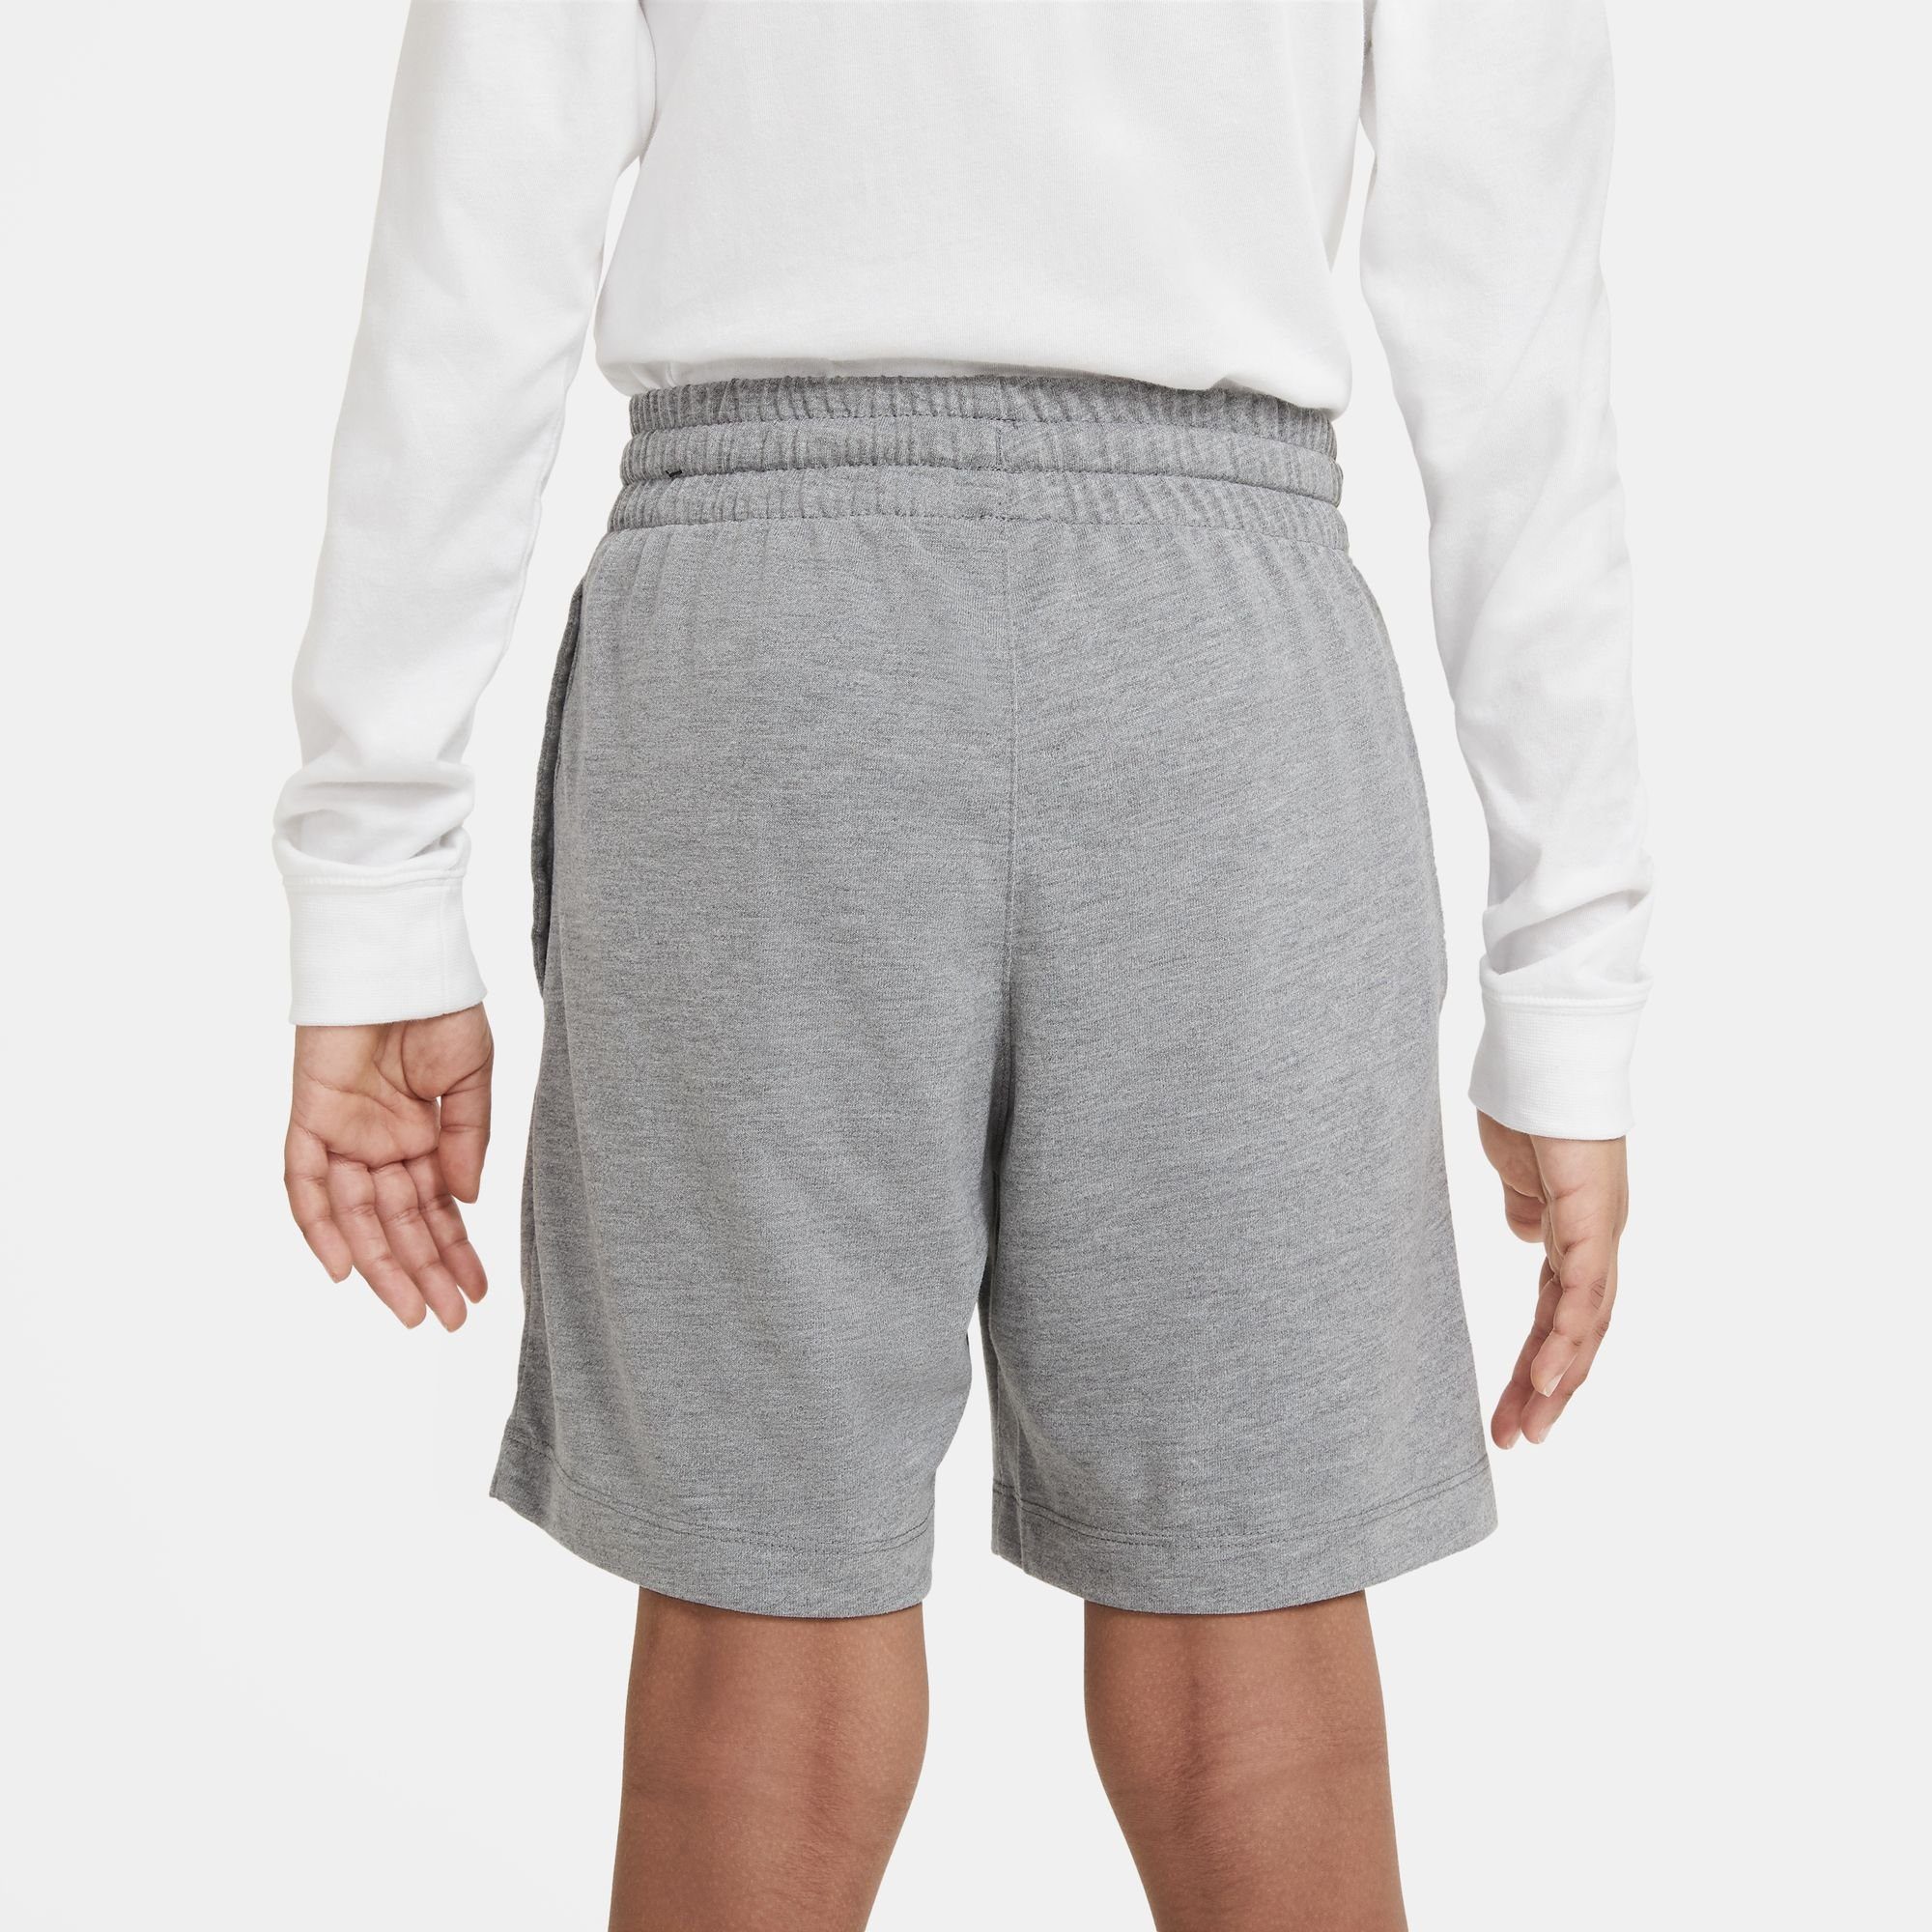 grau KIDS' SHORTS Sportswear JERSEY (BOYS) Nike BIG Shorts